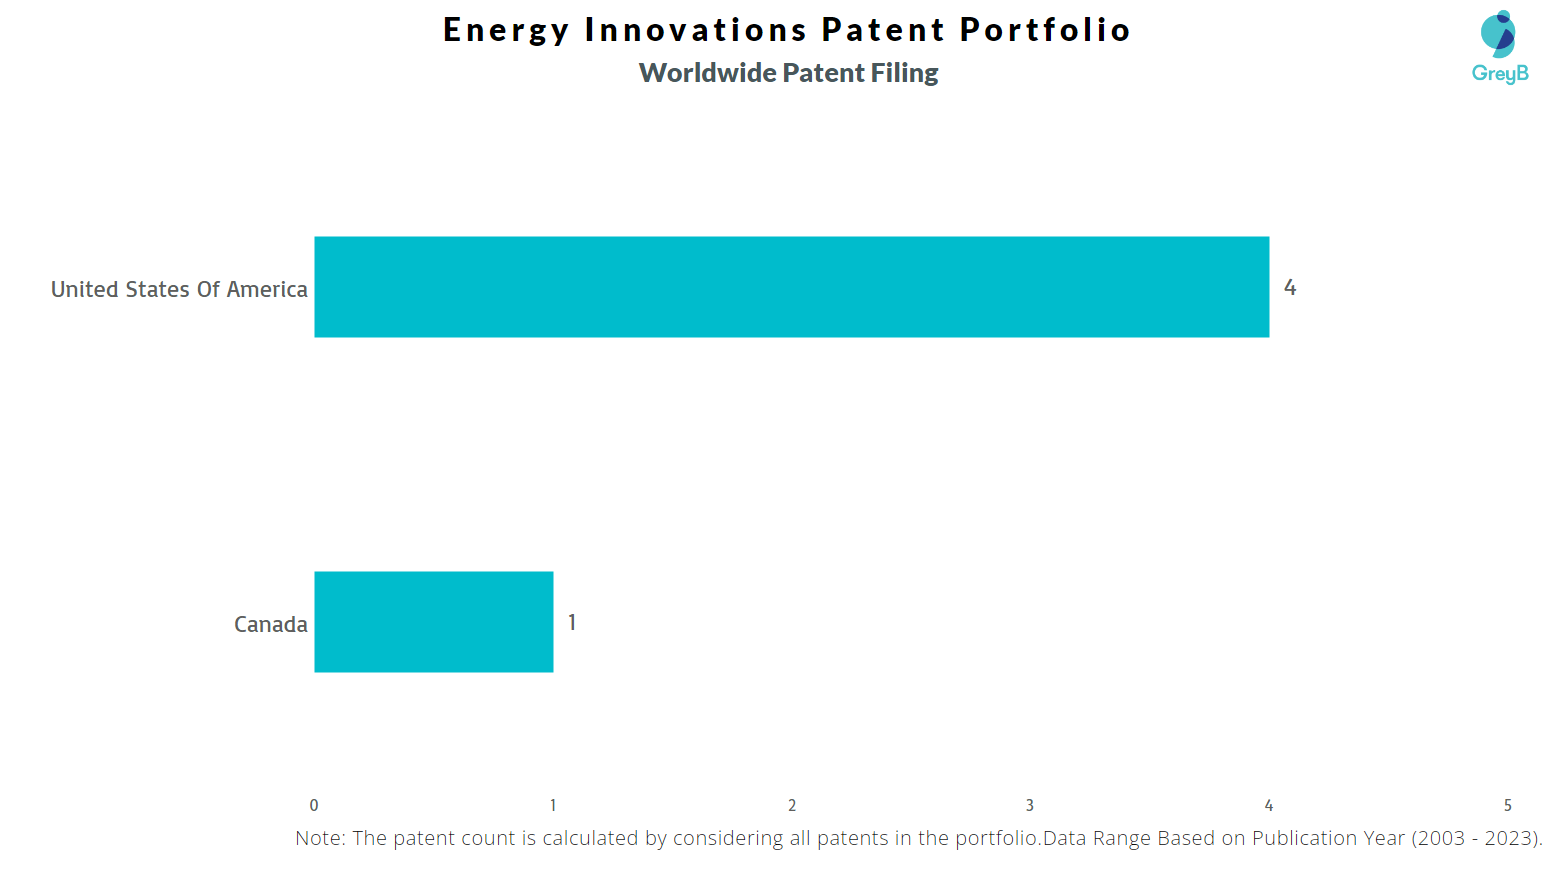 Energy Innovations Worldwide Patent Filing